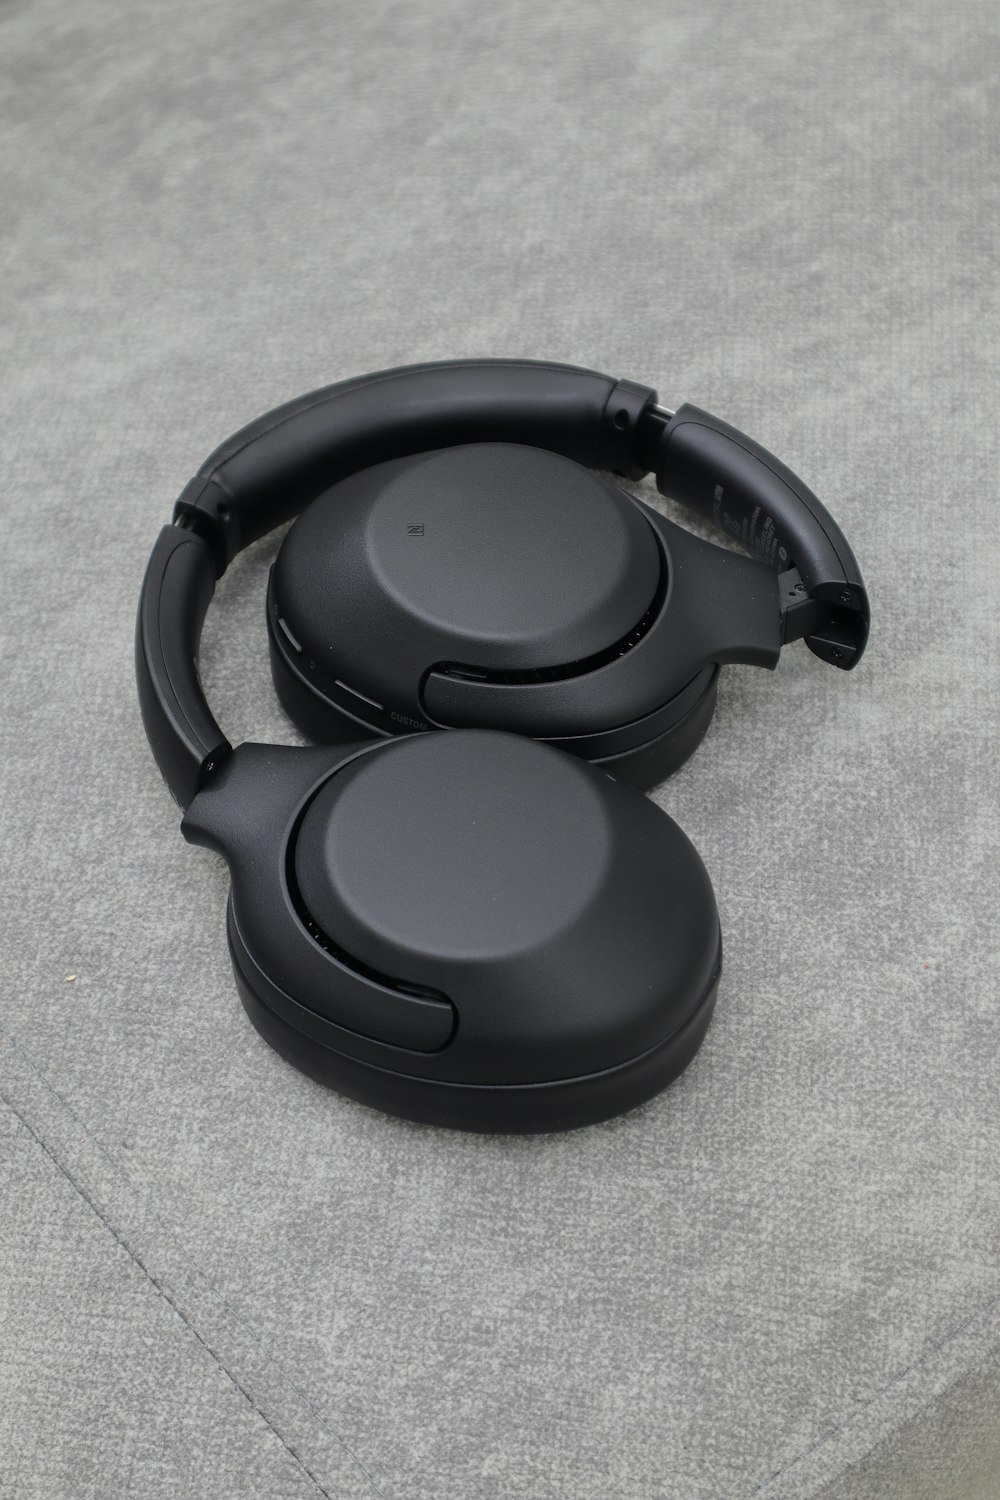 black and gray wireless headphones